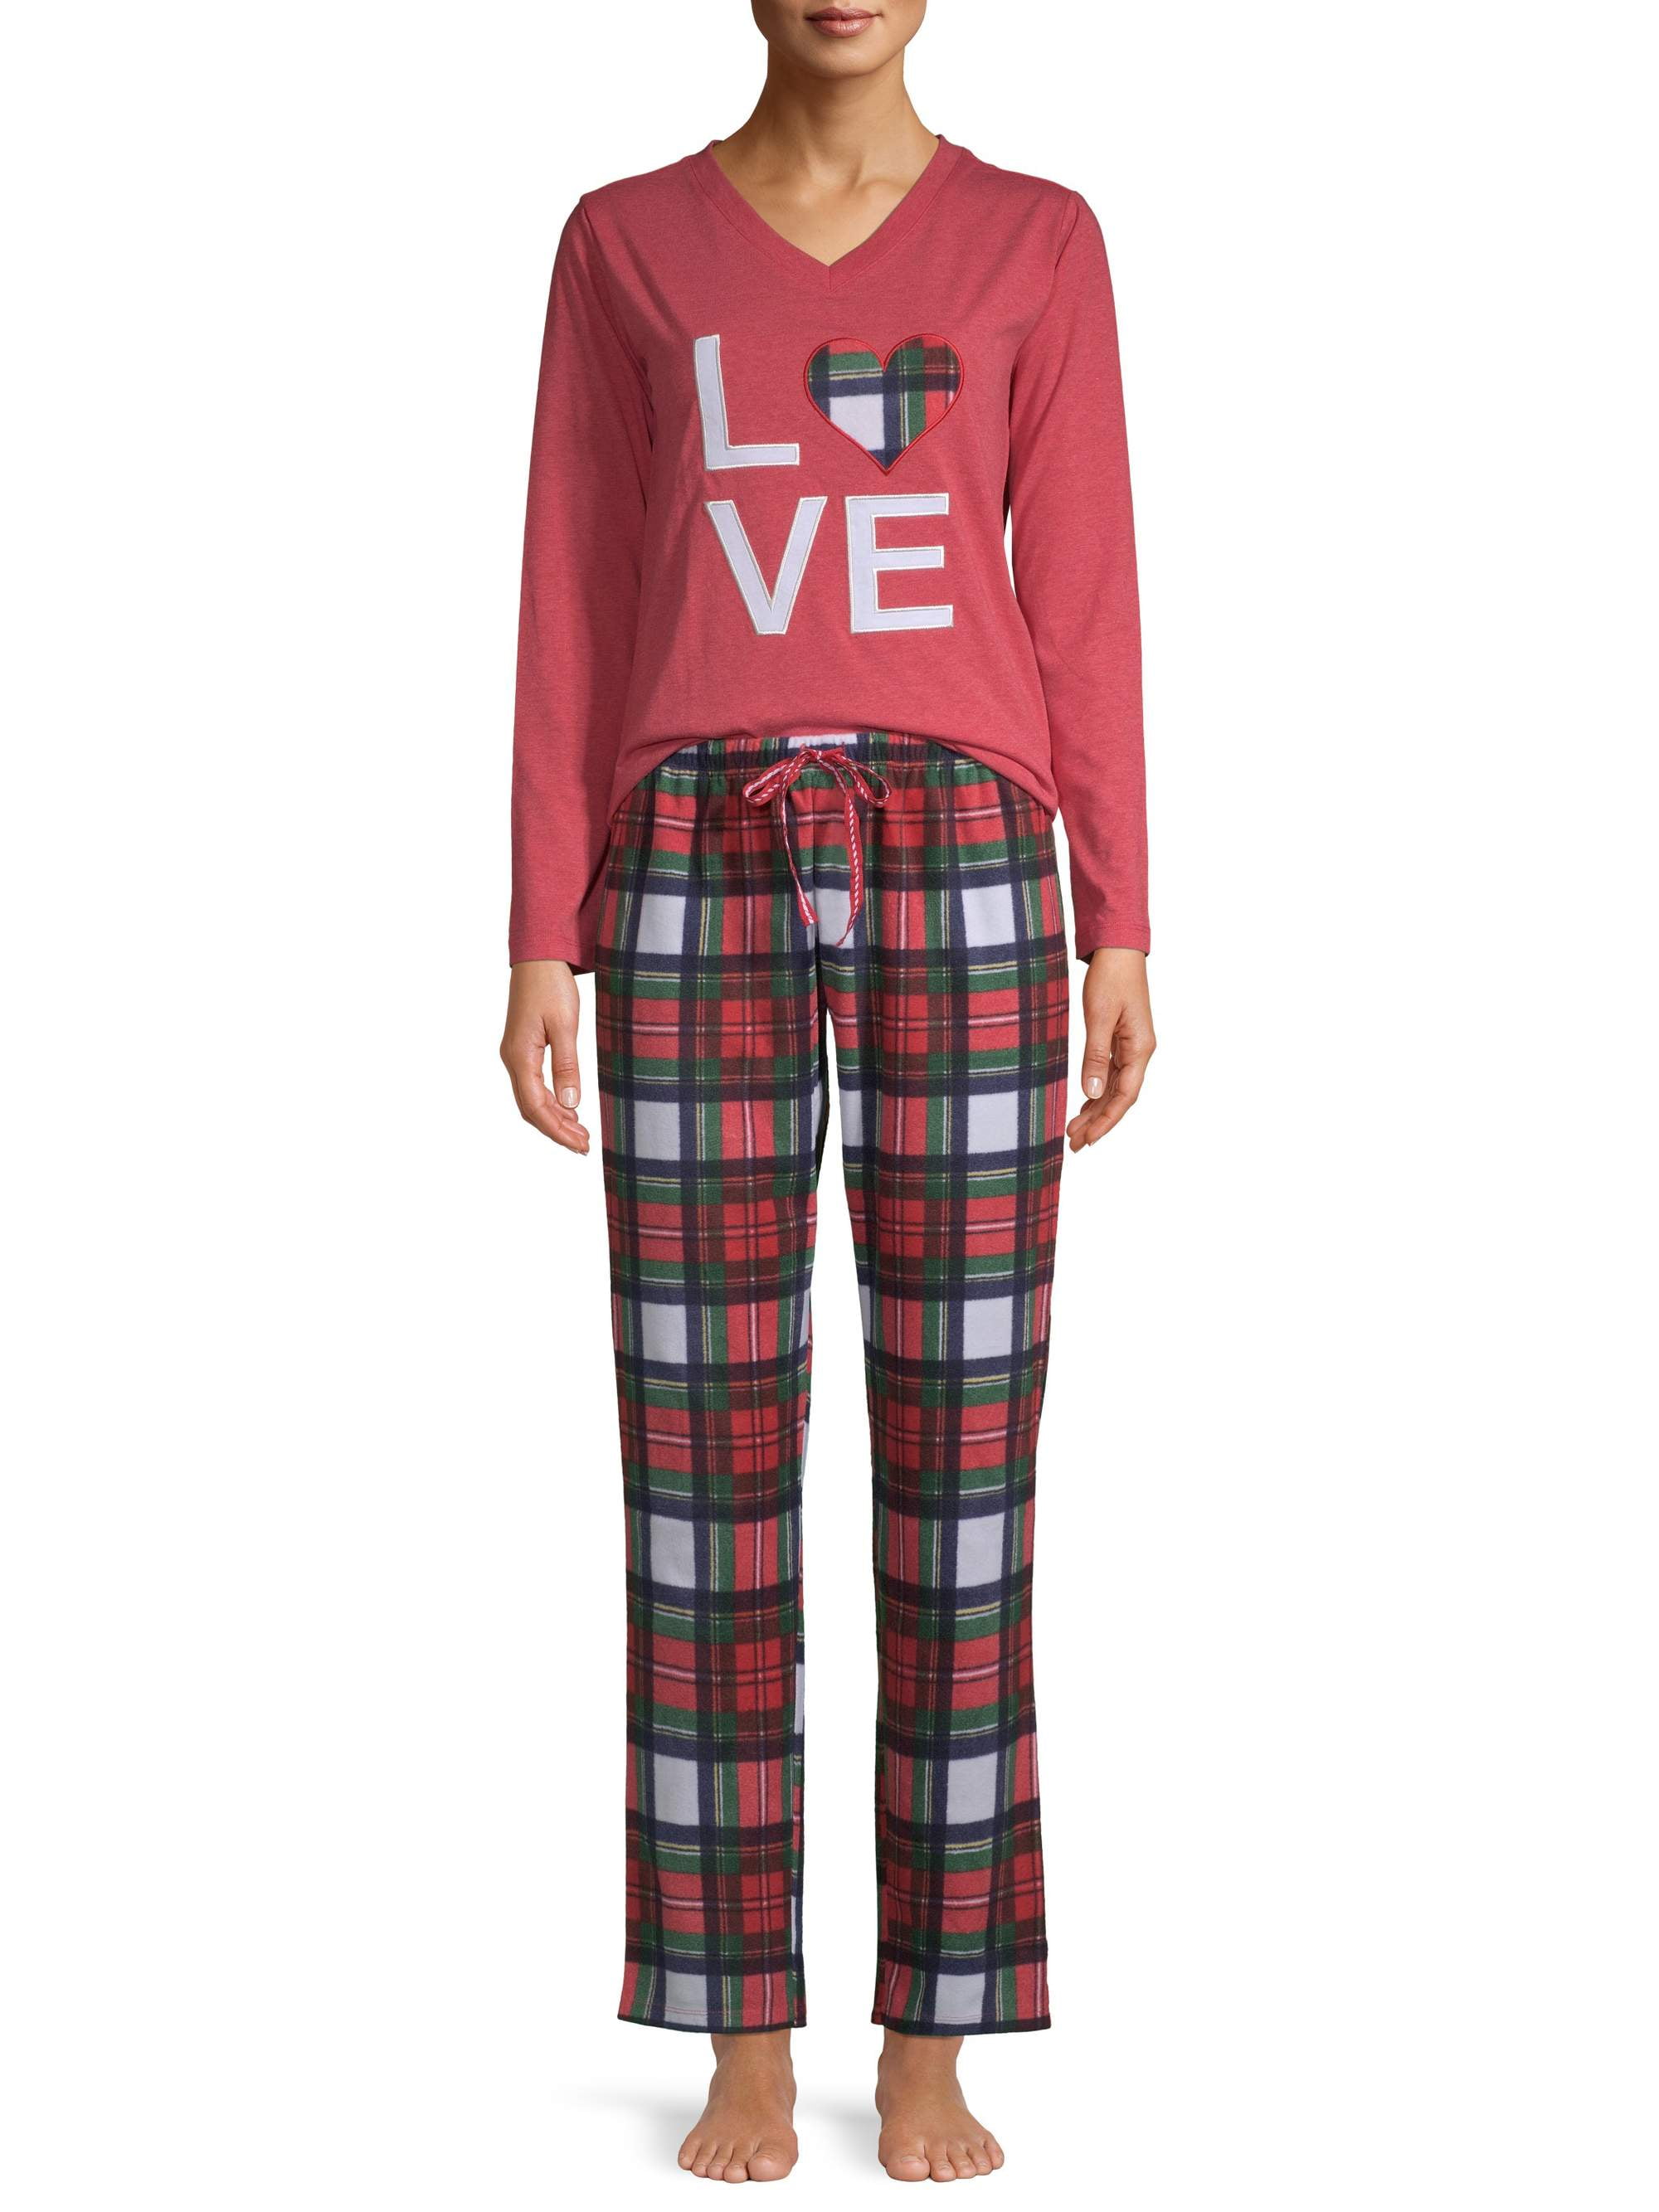 EV1 from Ellen DeGeneres - EV1 from Ellen DeGeneres Love Pajama Pant ...